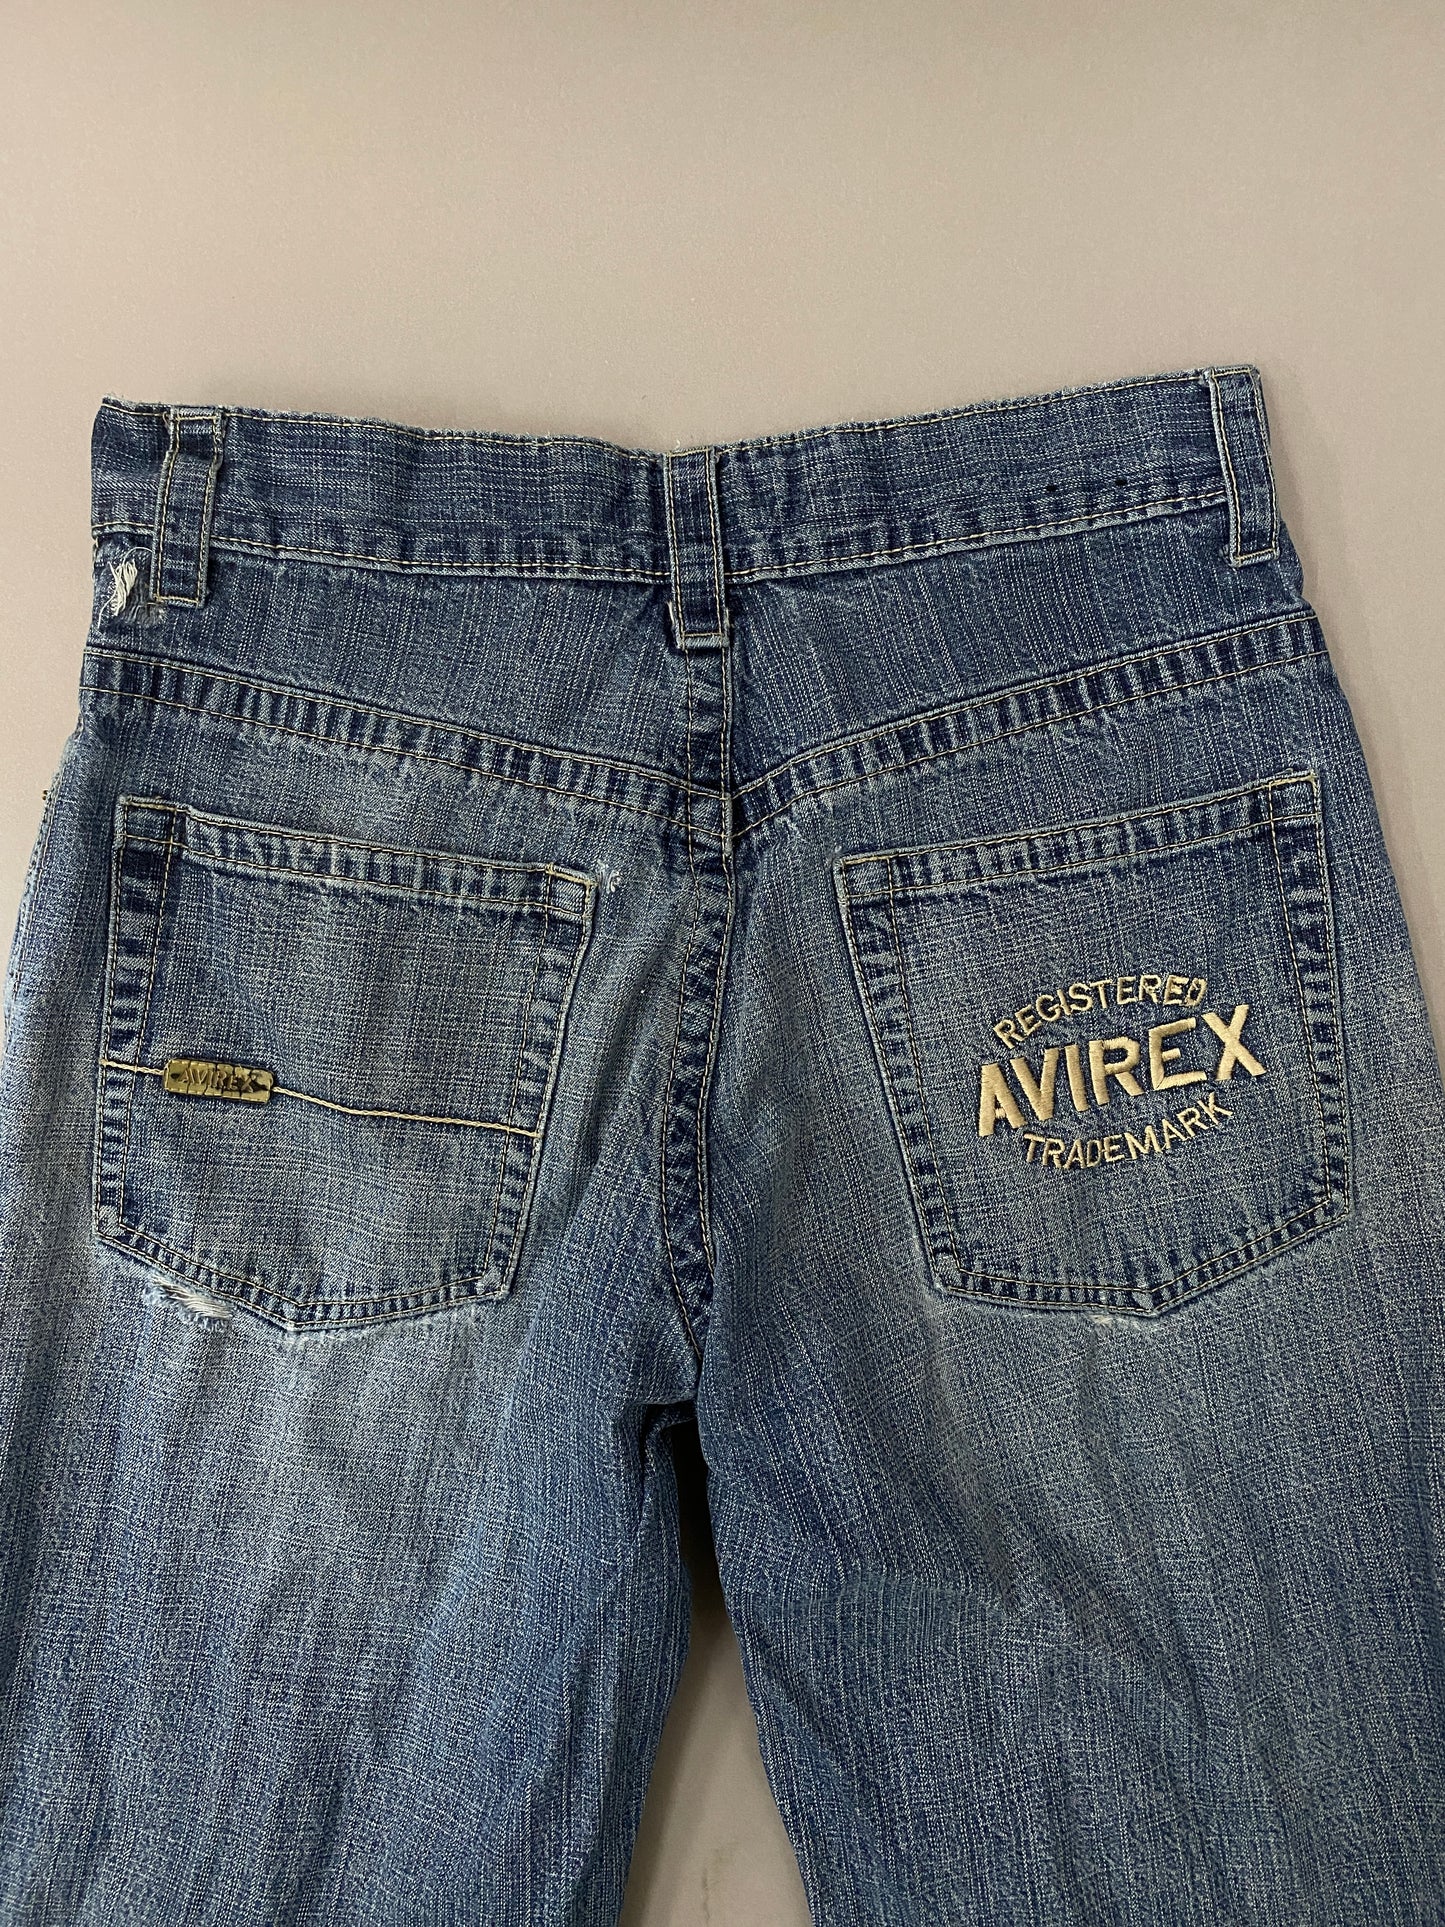 Jeans Avirex 90's - 32x30